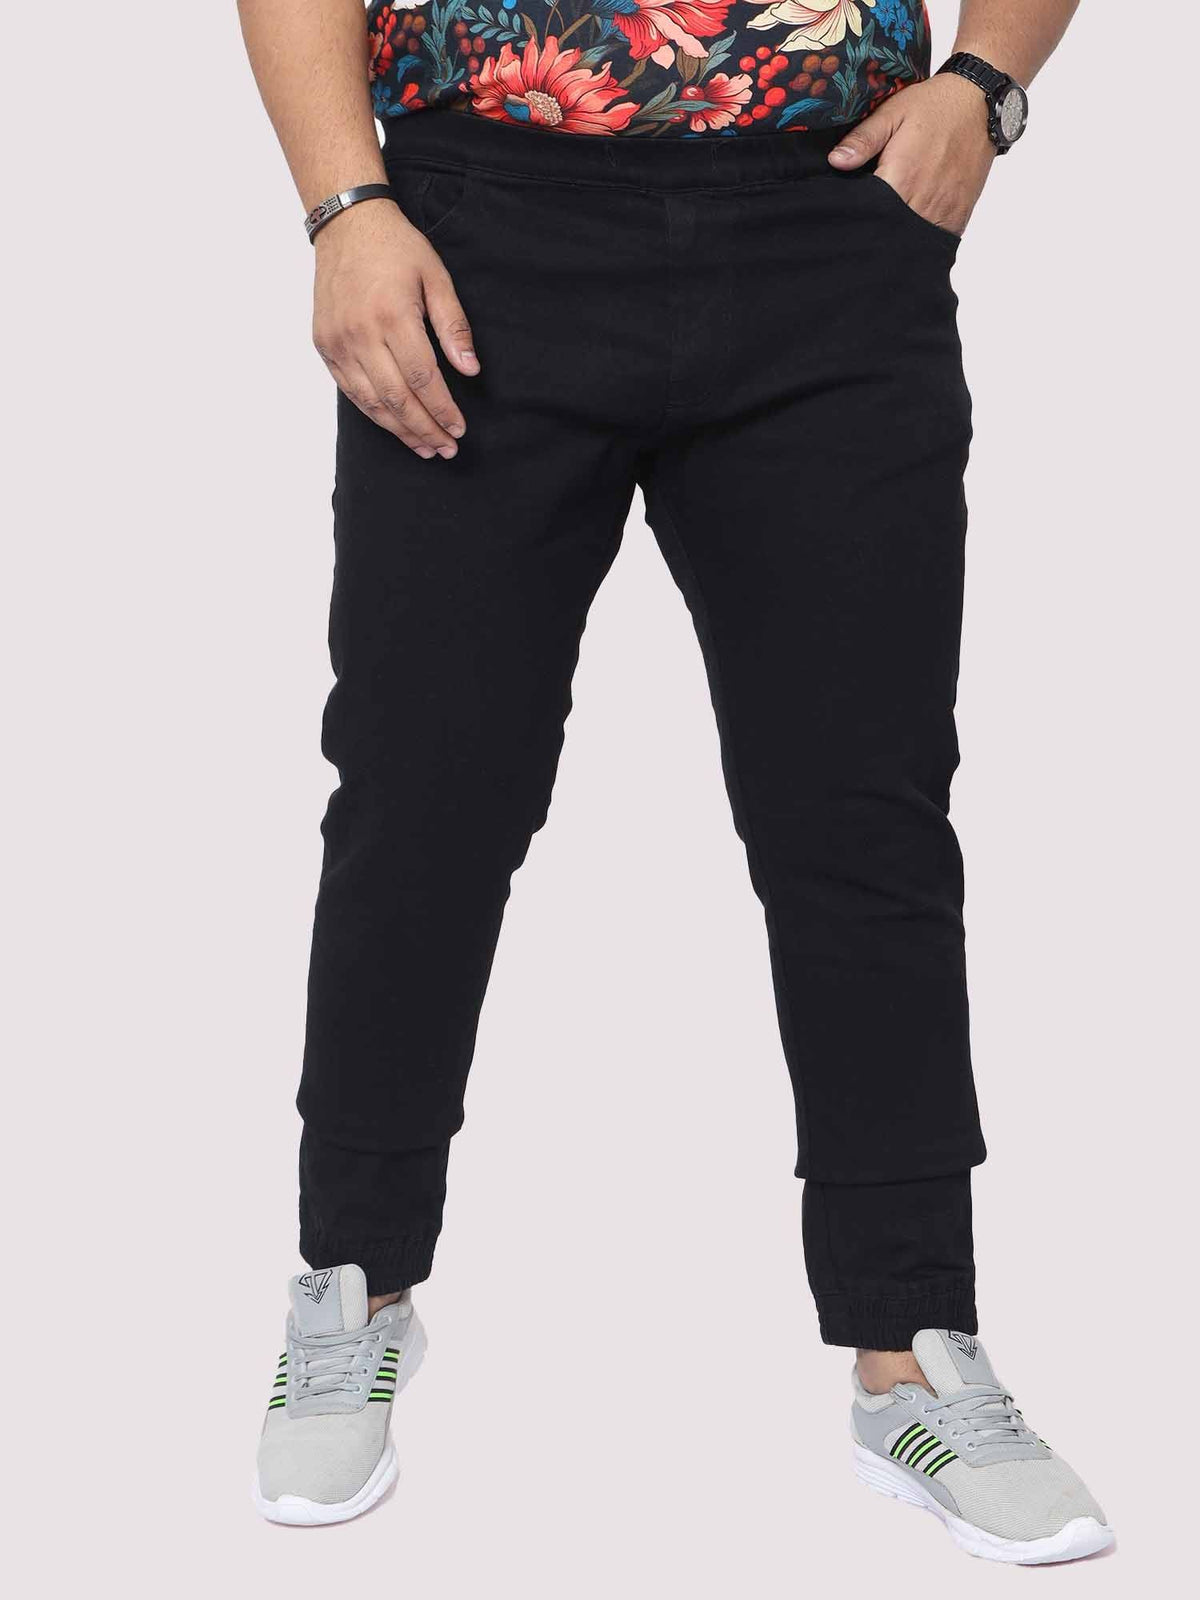 Black Jogger Pants Men's Plus Size - Guniaa Fashions